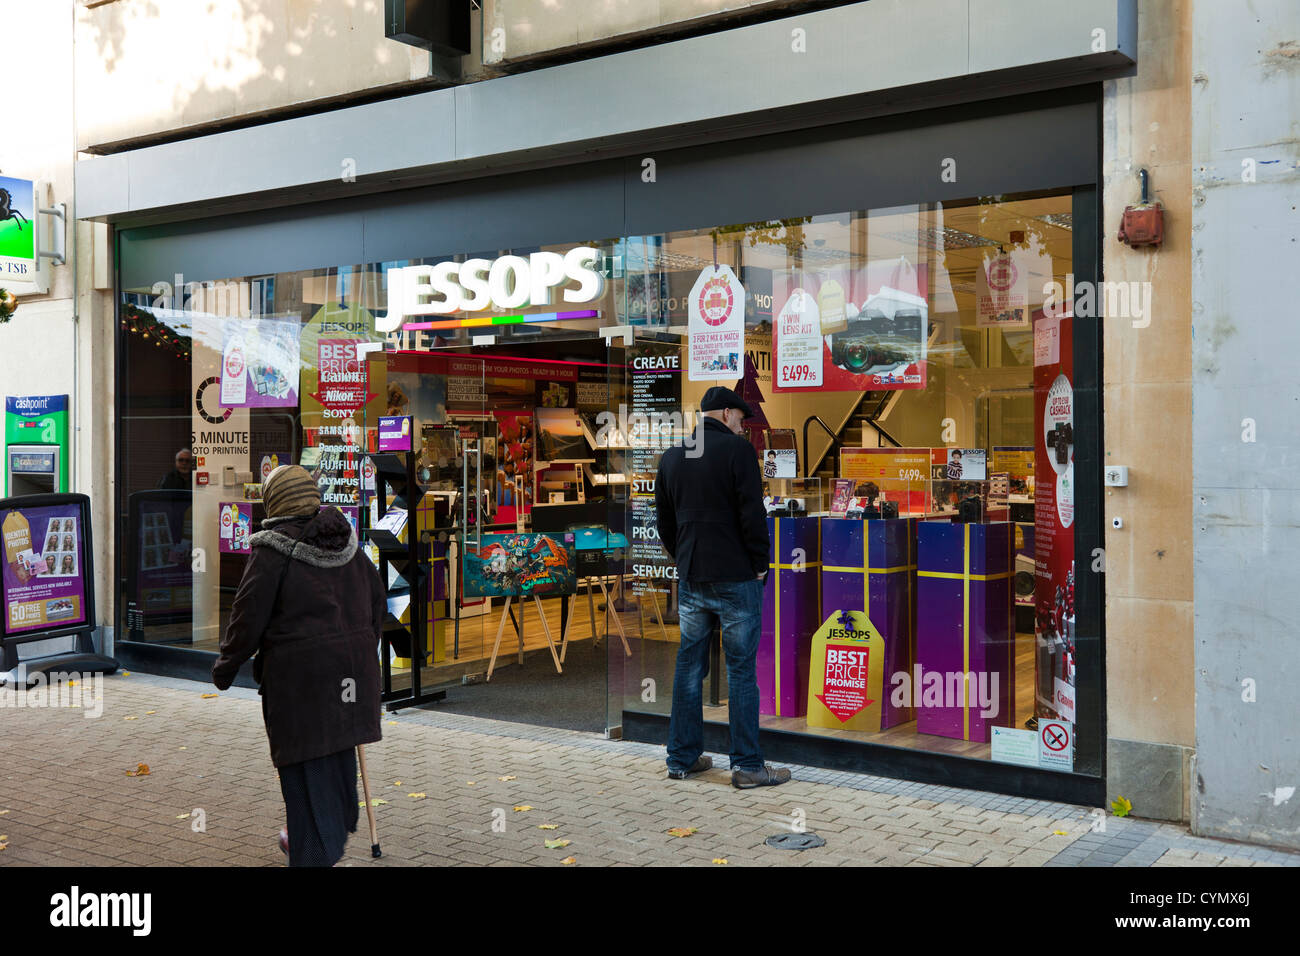 Jessops photographic retailer shop outlet premises in Bristol city center location. Stock Photo